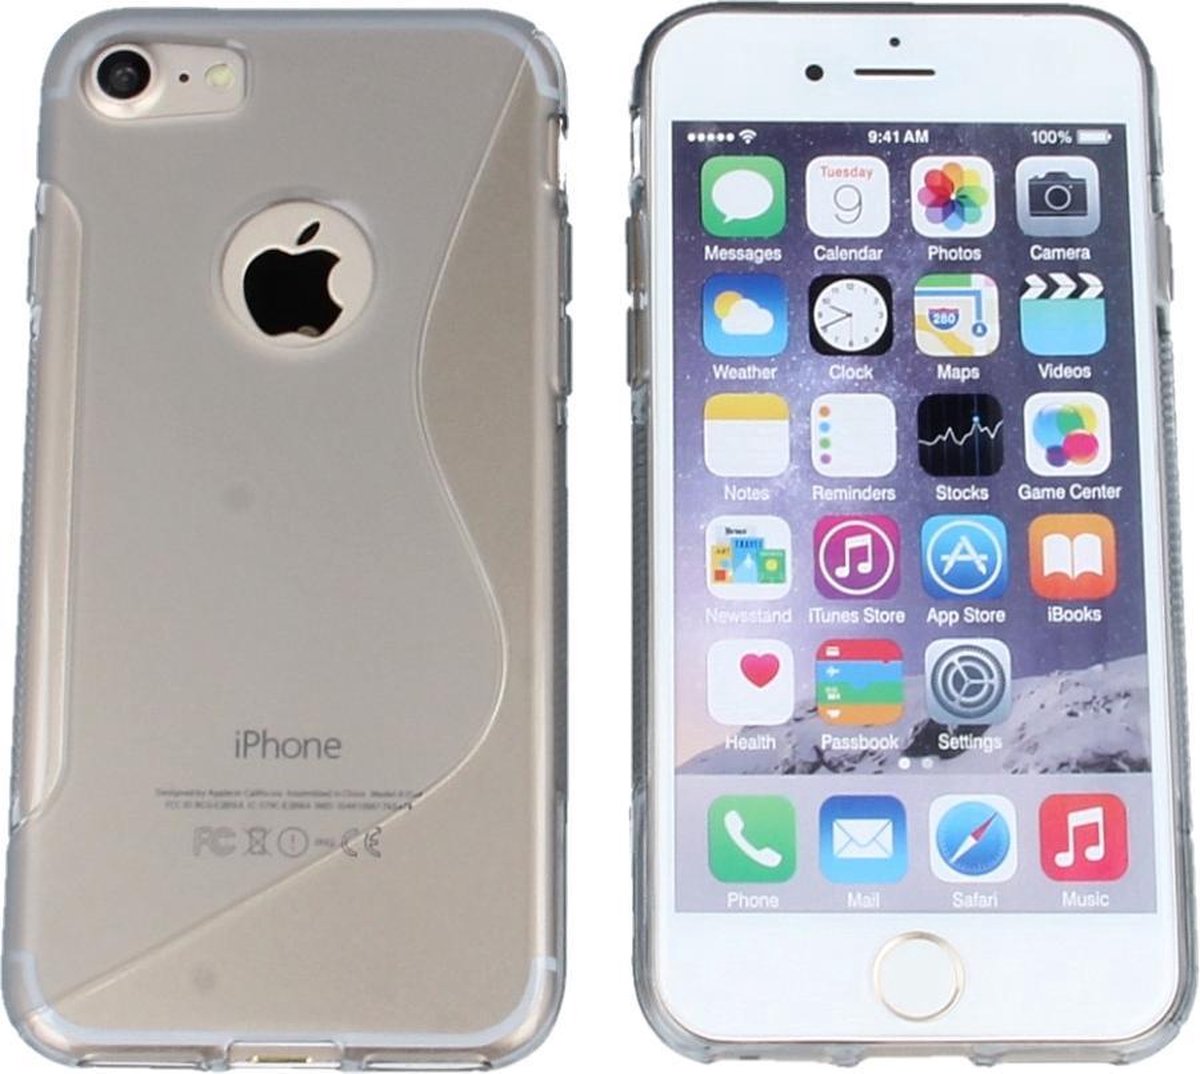 S Line Gel Silicone Case Hoesje Transparant Grijs Grey voor Apple iPhone 7 Plus